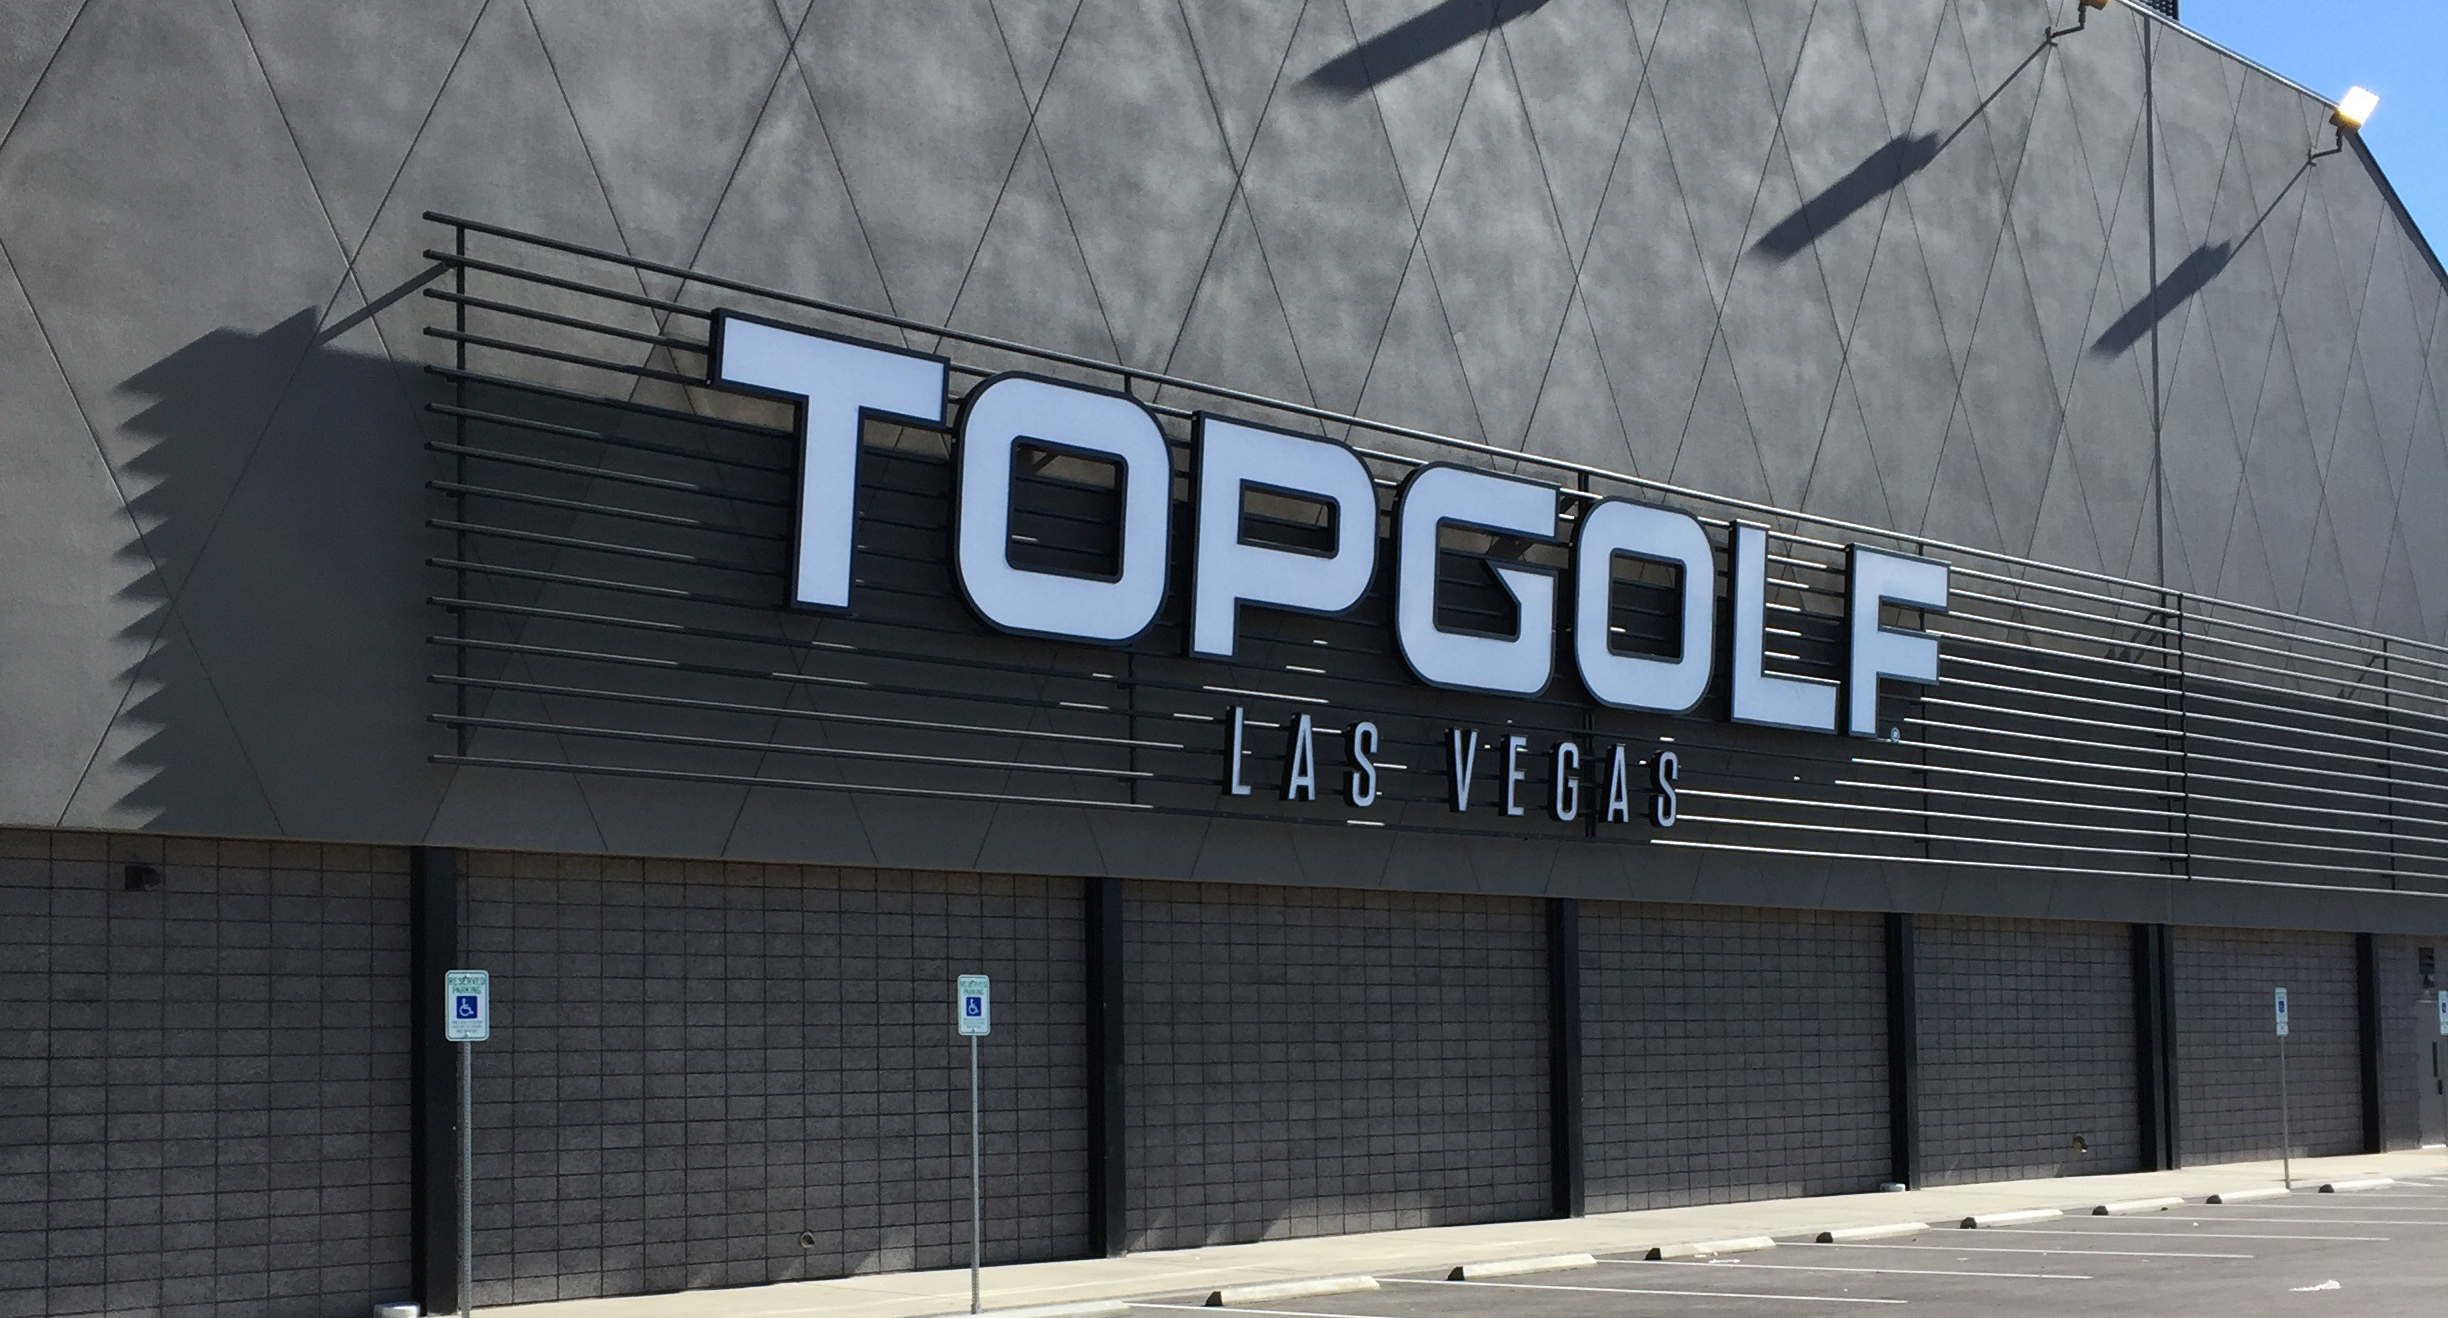 Topgolf Las Vegas - Las Vegas - Tickets